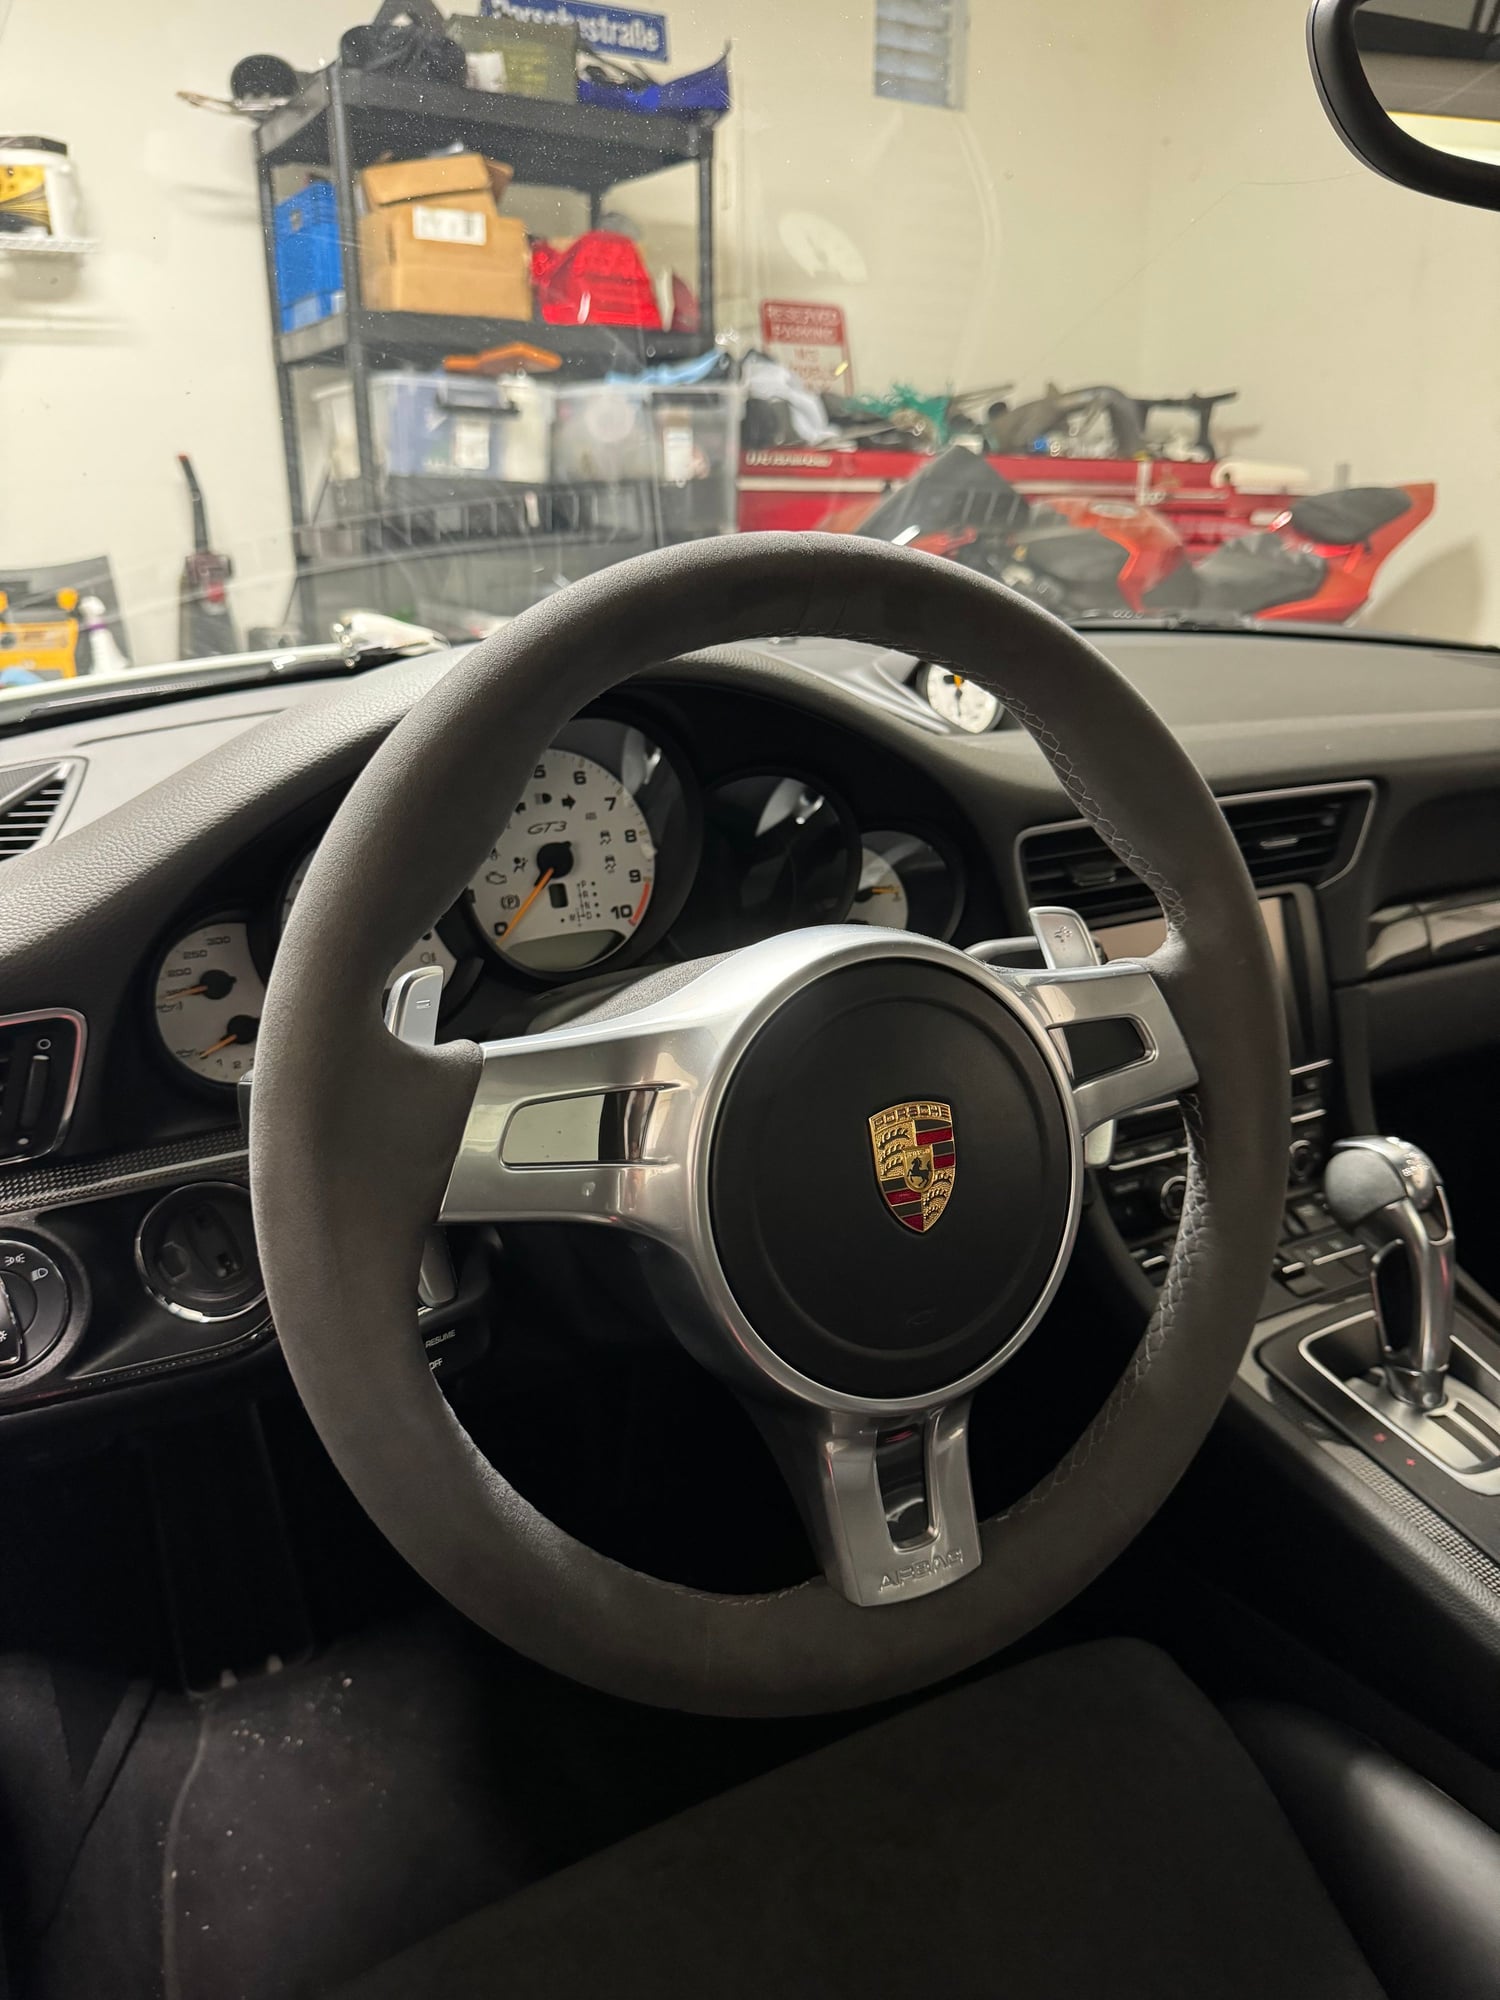 Interior/Upholstery - 991 GT3 Alcantara Steering Wheel & Airbag - Used - Tustin, CA 92705, United States